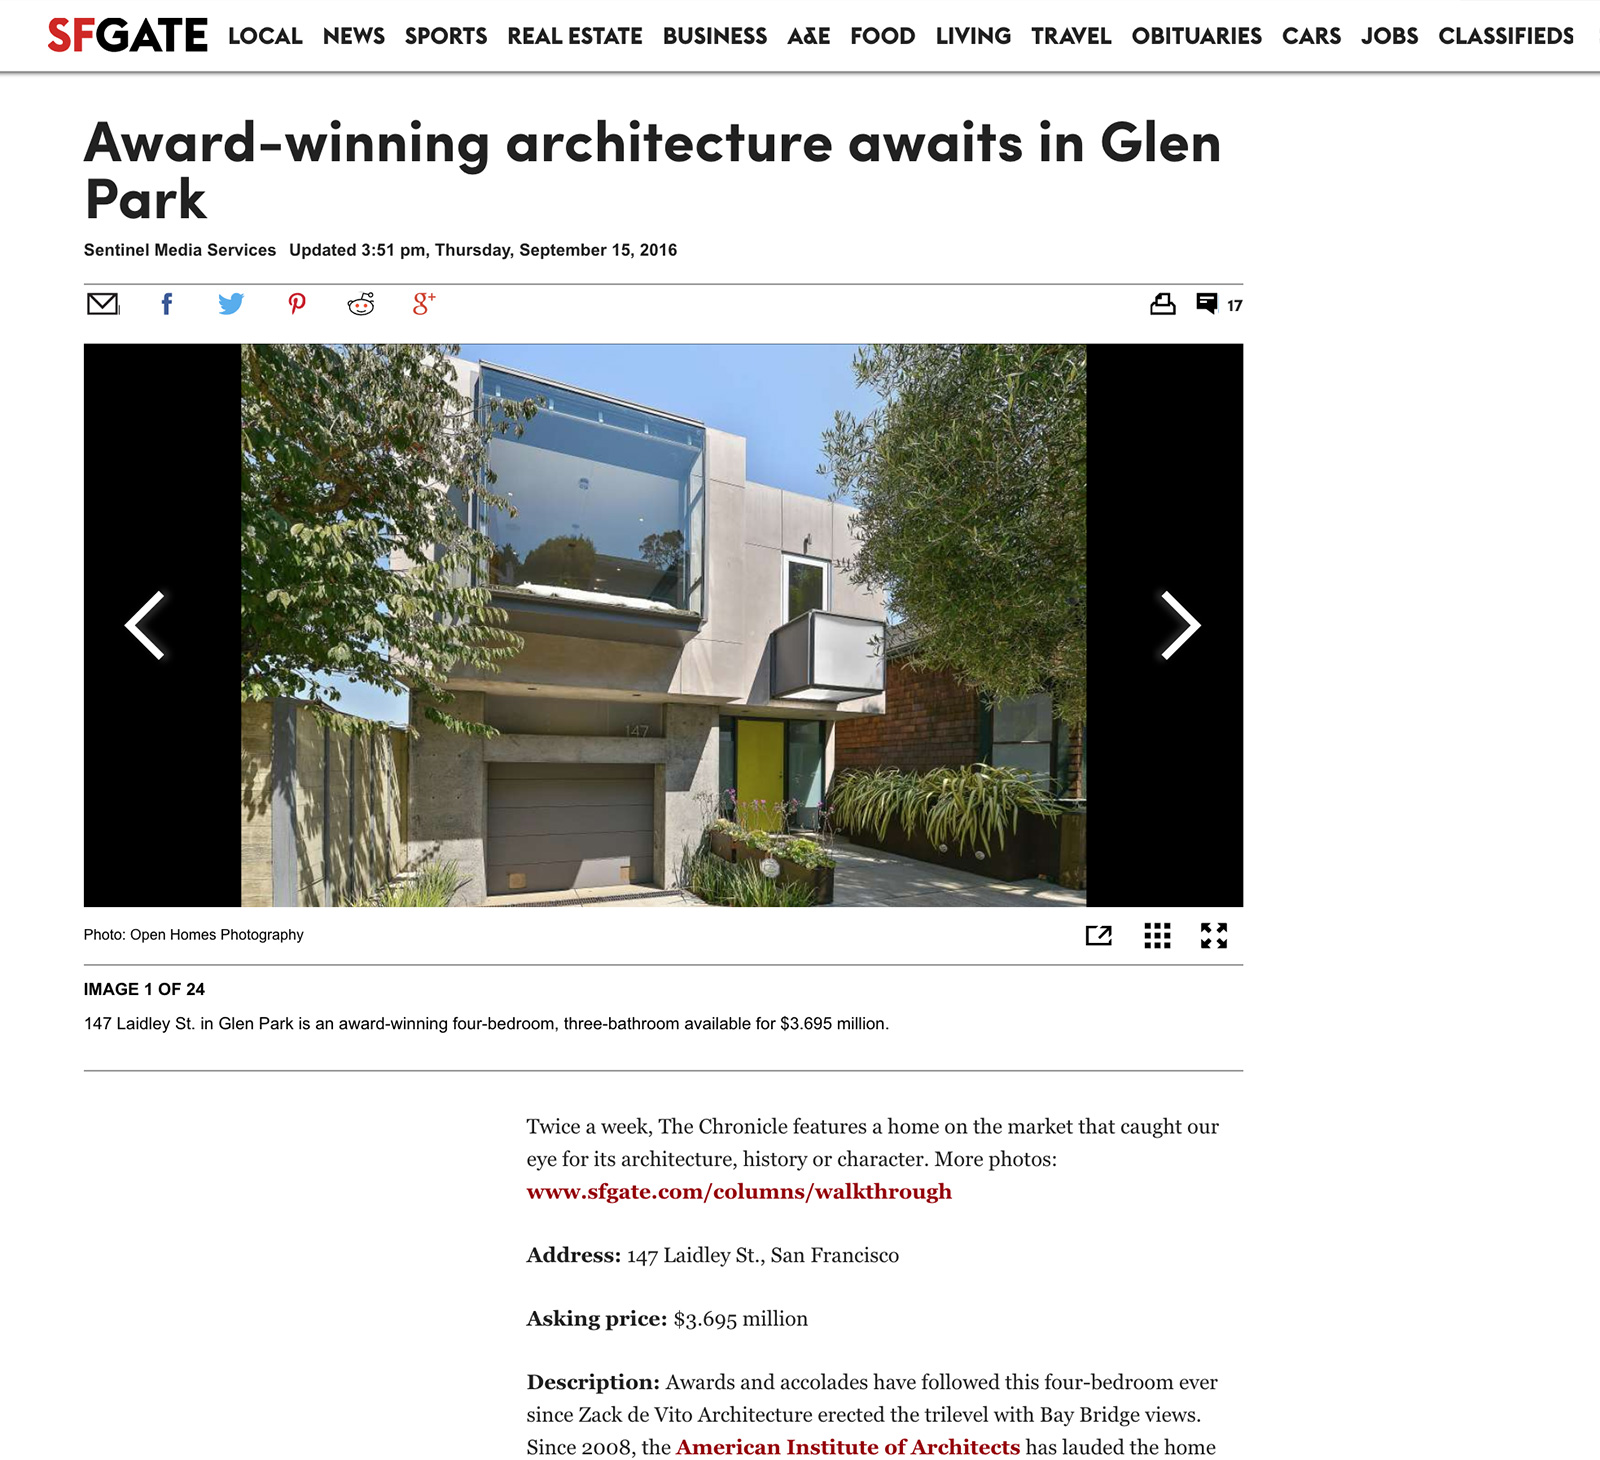 Award-winning architecture awaits in Glen Park